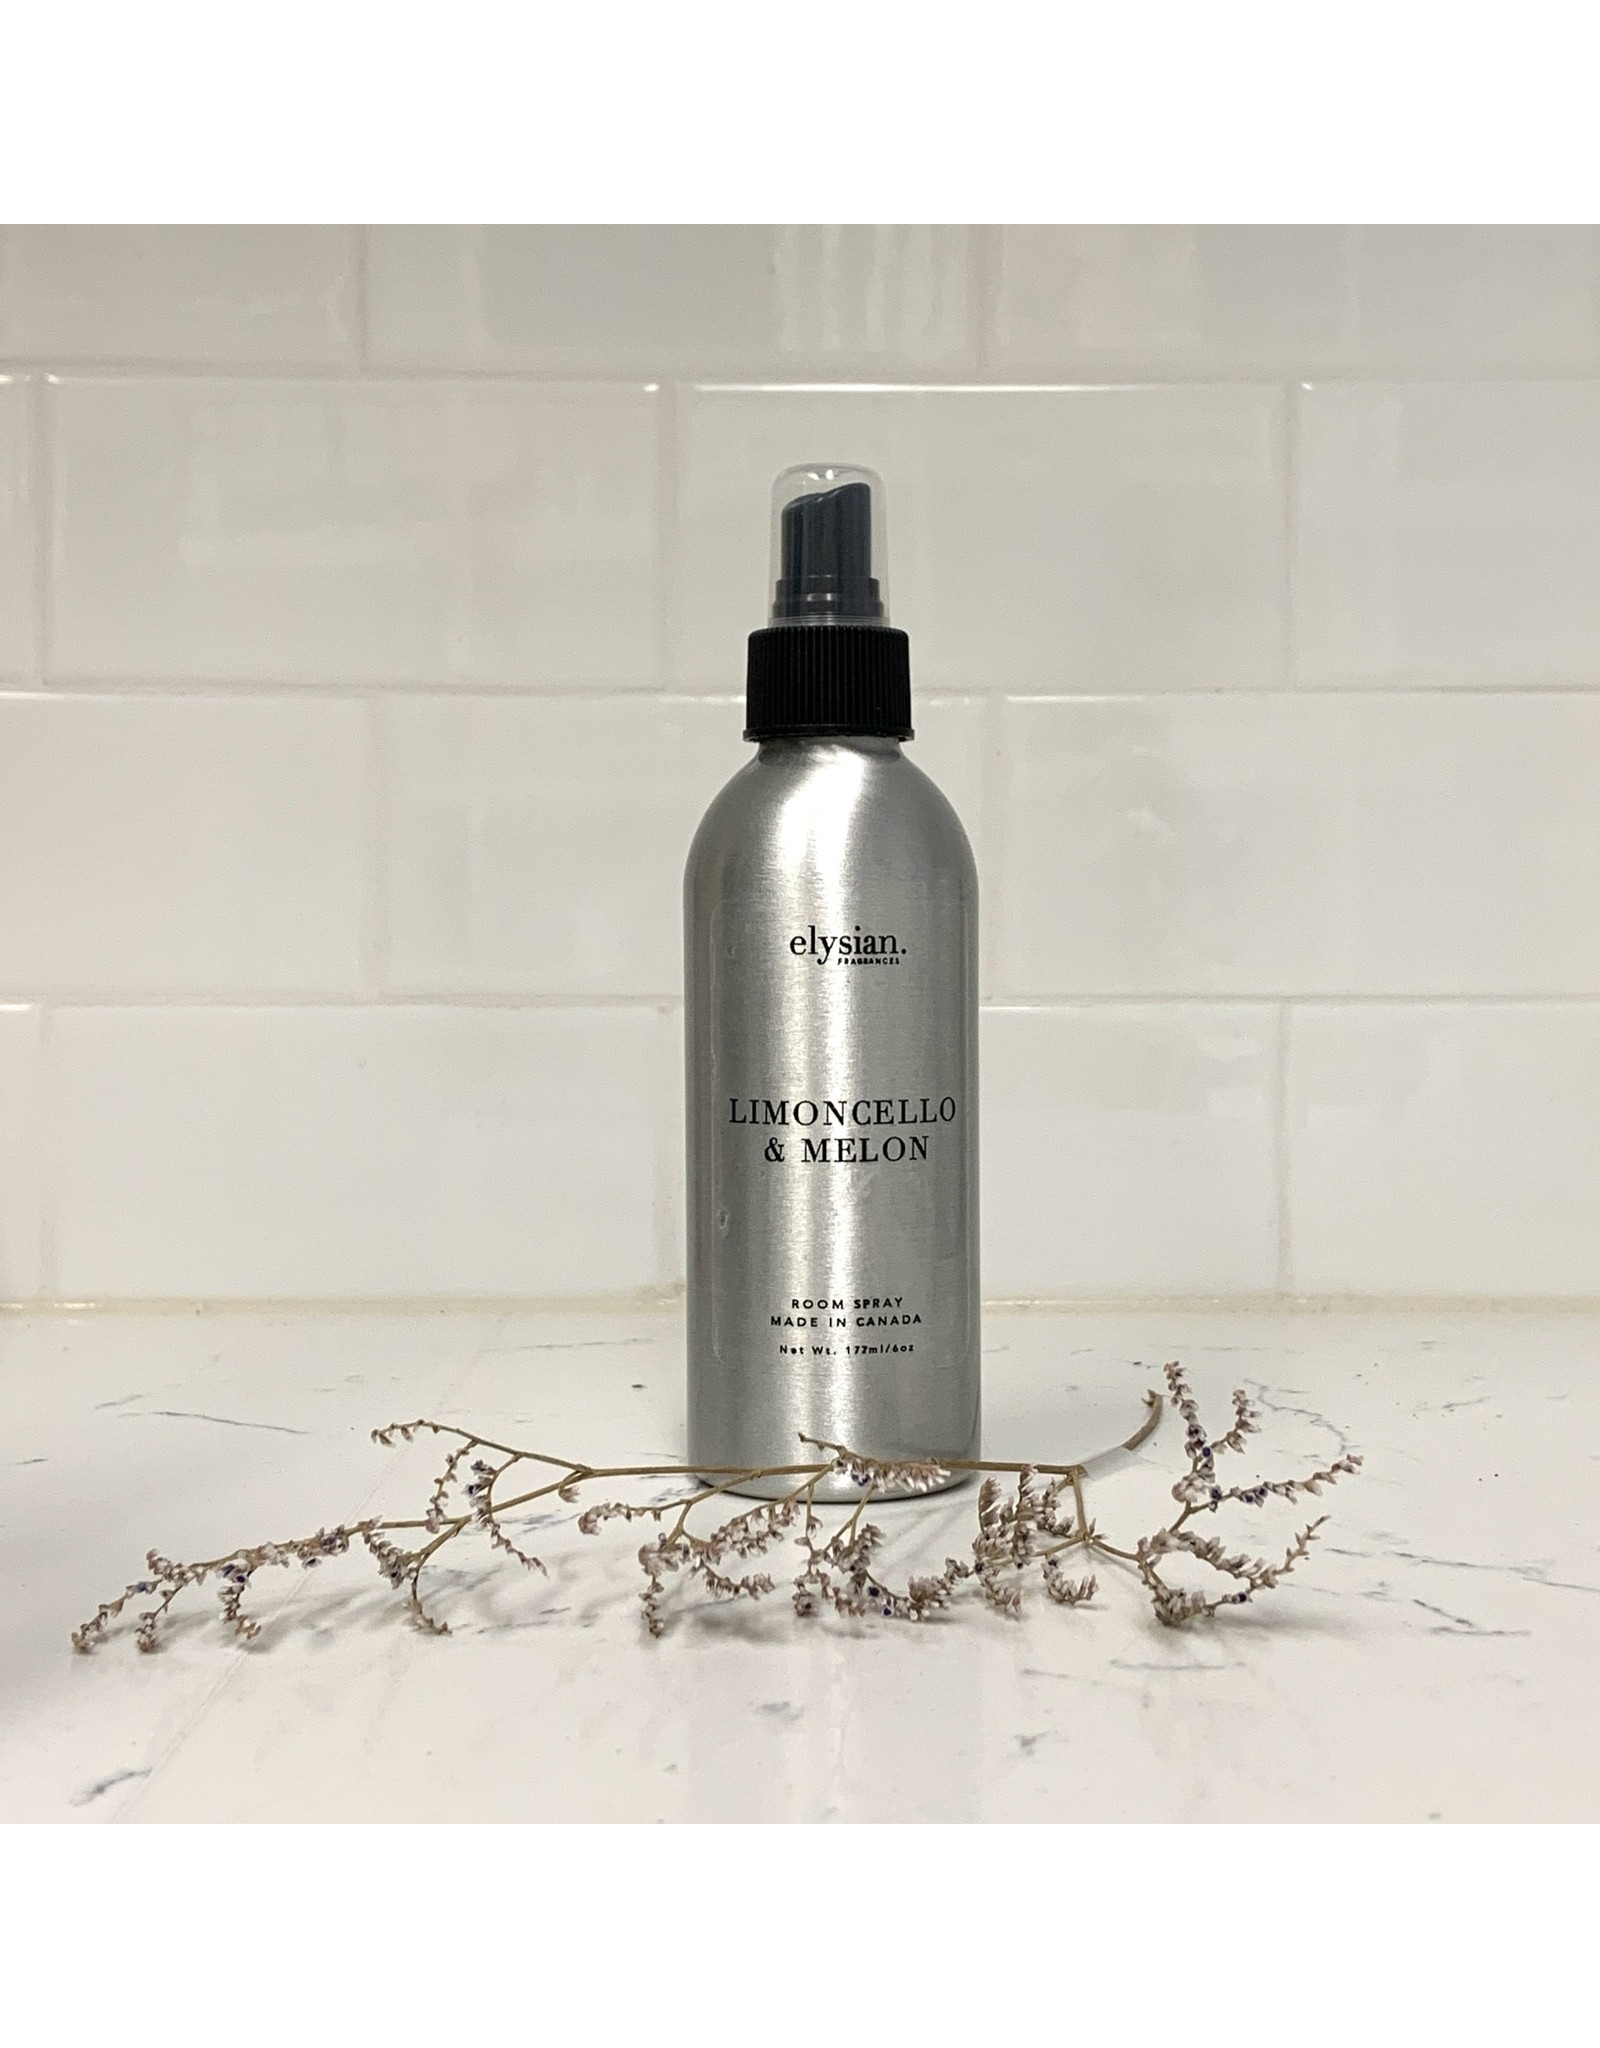 Elysian Fragrances Room and Linen Spray